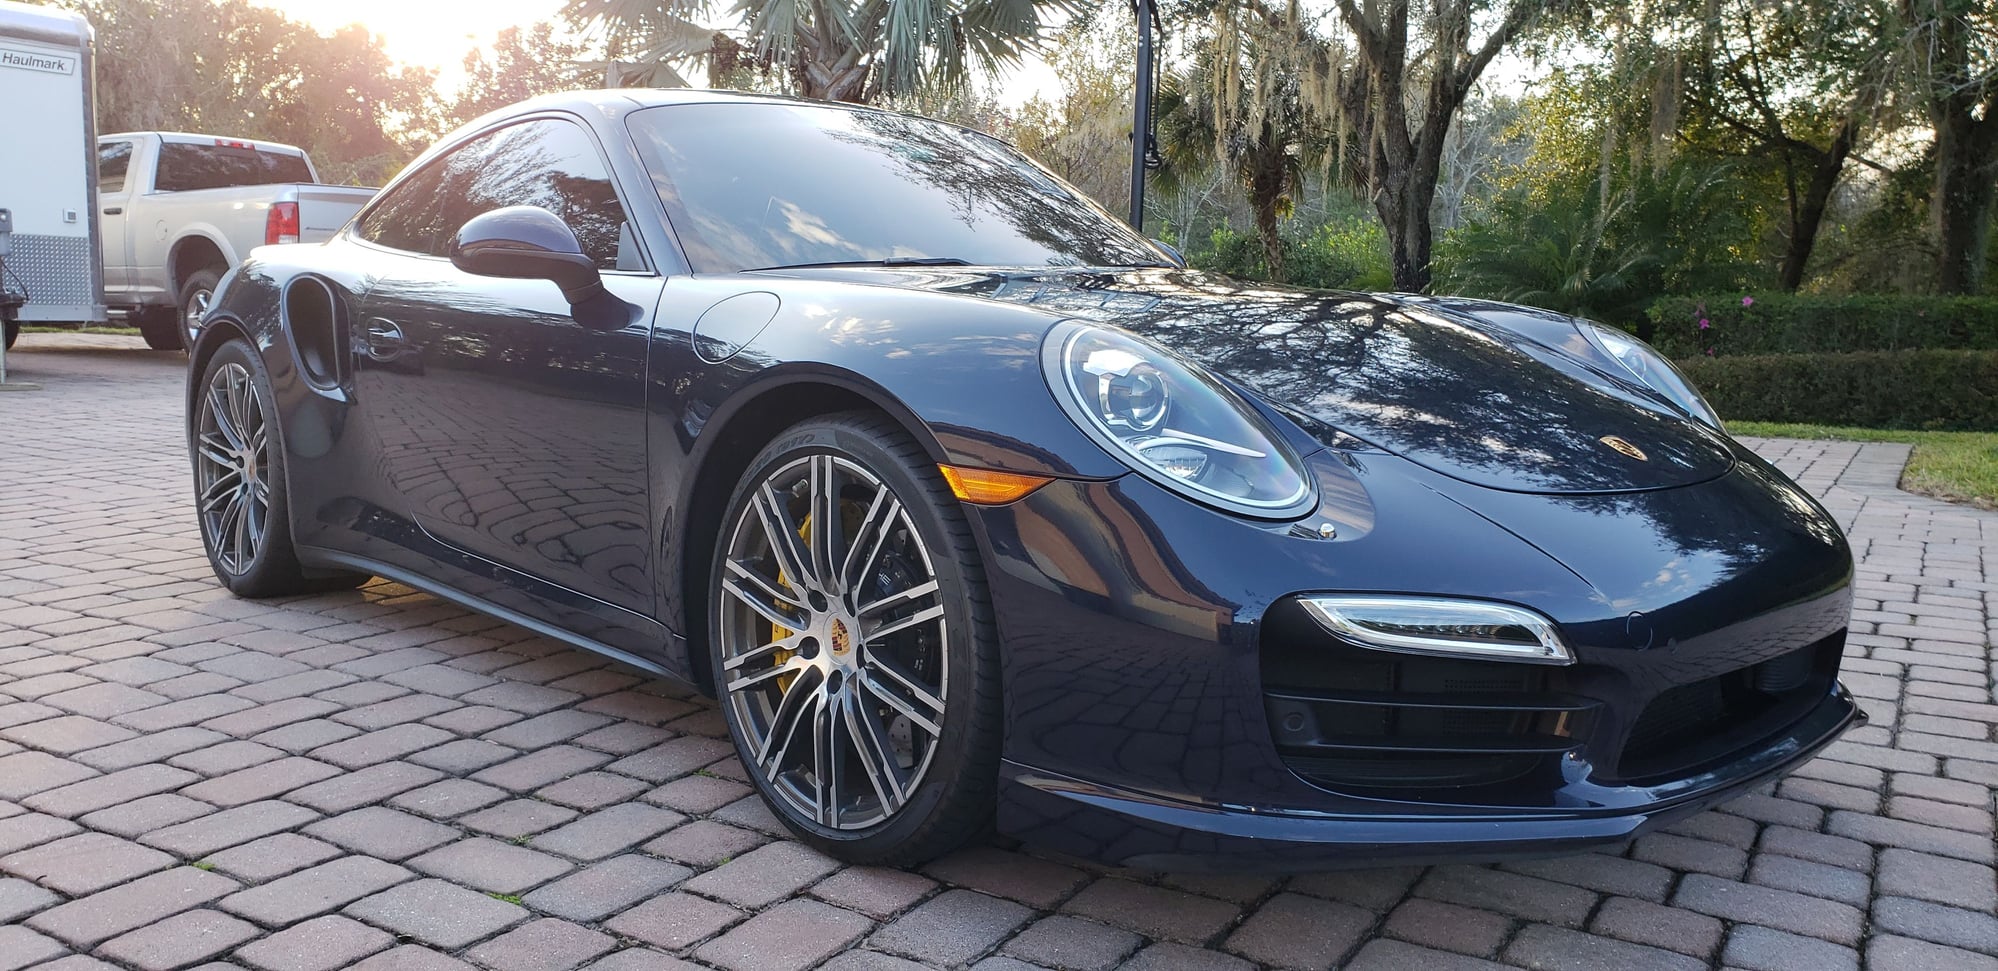 2014 Porsche 911 - 2014 Porsche 911 Turbo - Used - VIN WP0AD2A91ES167397 - 10,856 Miles - 6 cyl - AWD - Automatic - Sedan - Blue - Oviedo, FL 32765, United States